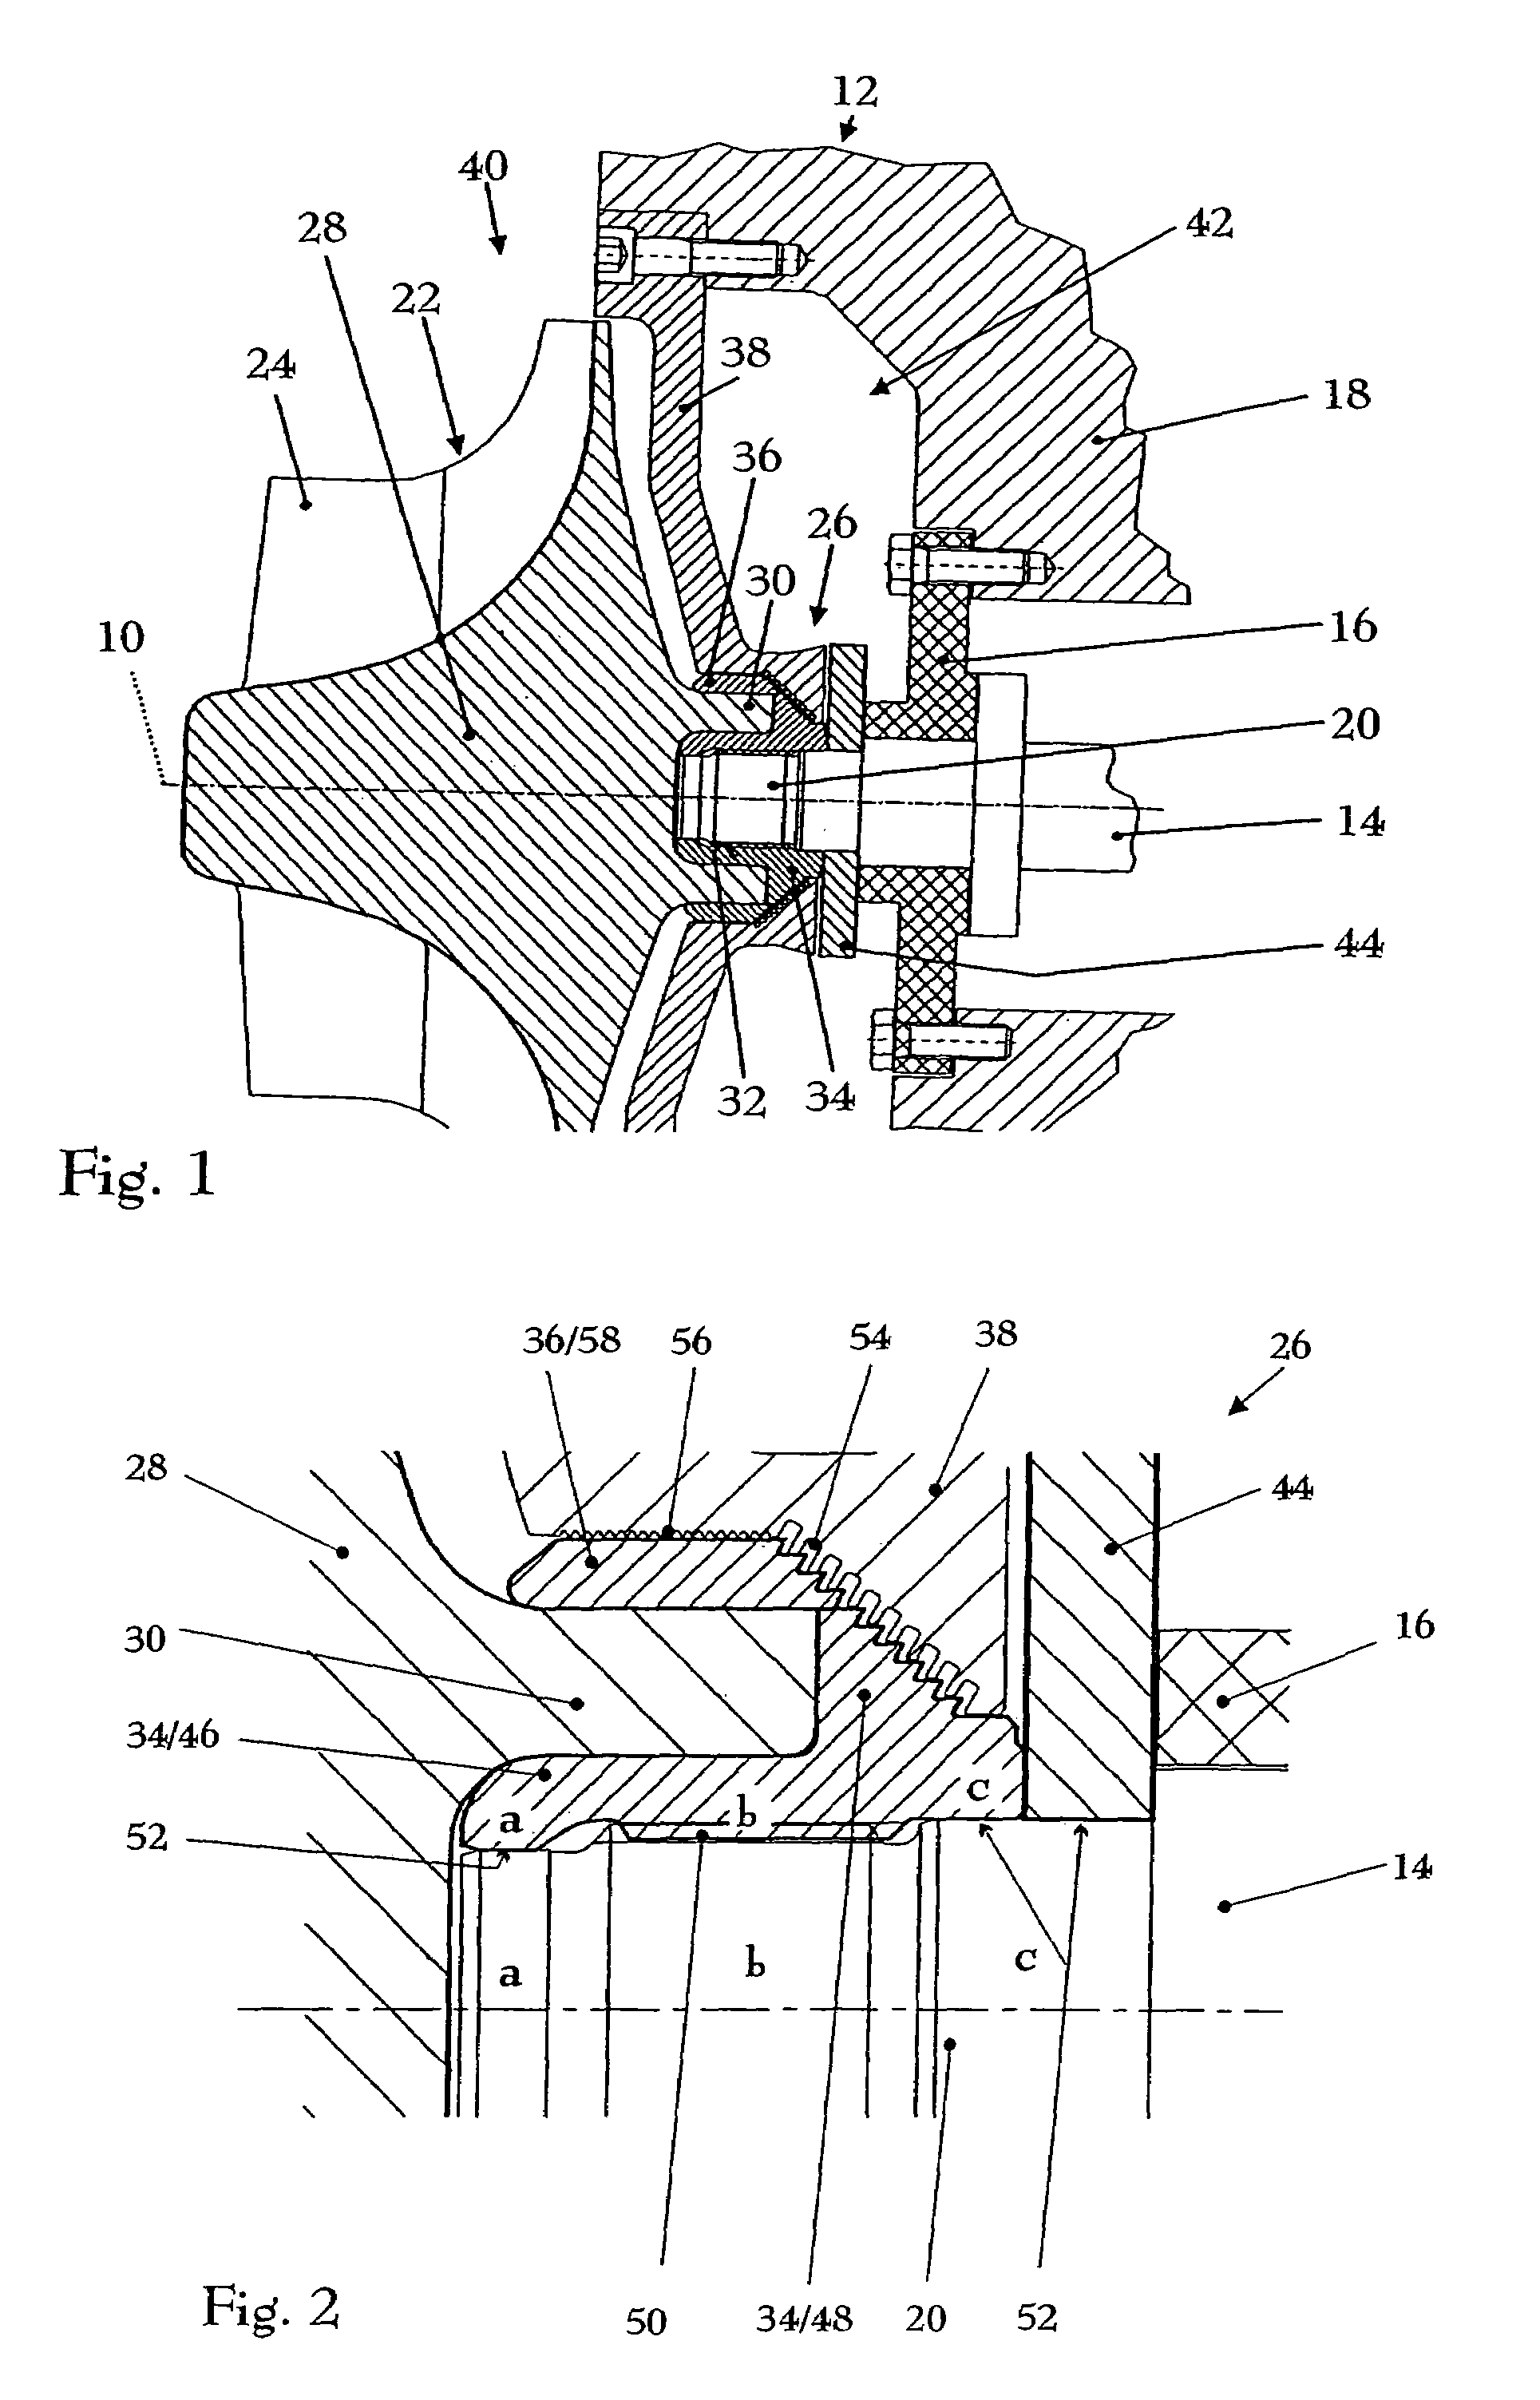 Fastening arrangement for an impeller on a shaft